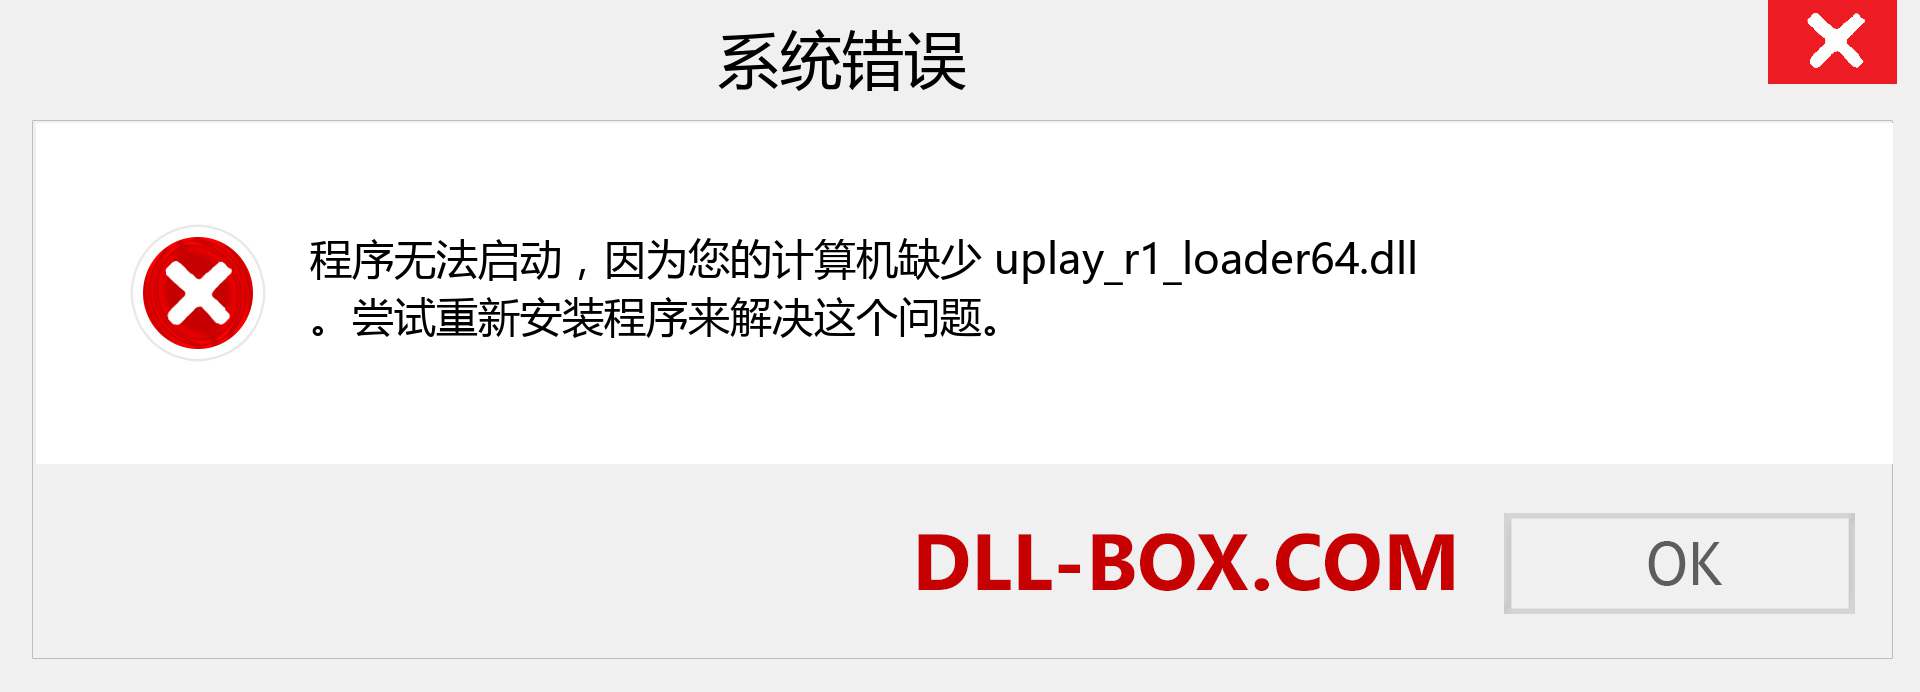 uplay_r1_loader64.dll 文件丢失？。 适用于 Windows 7、8、10 的下载 - 修复 Windows、照片、图像上的 uplay_r1_loader64 dll 丢失错误